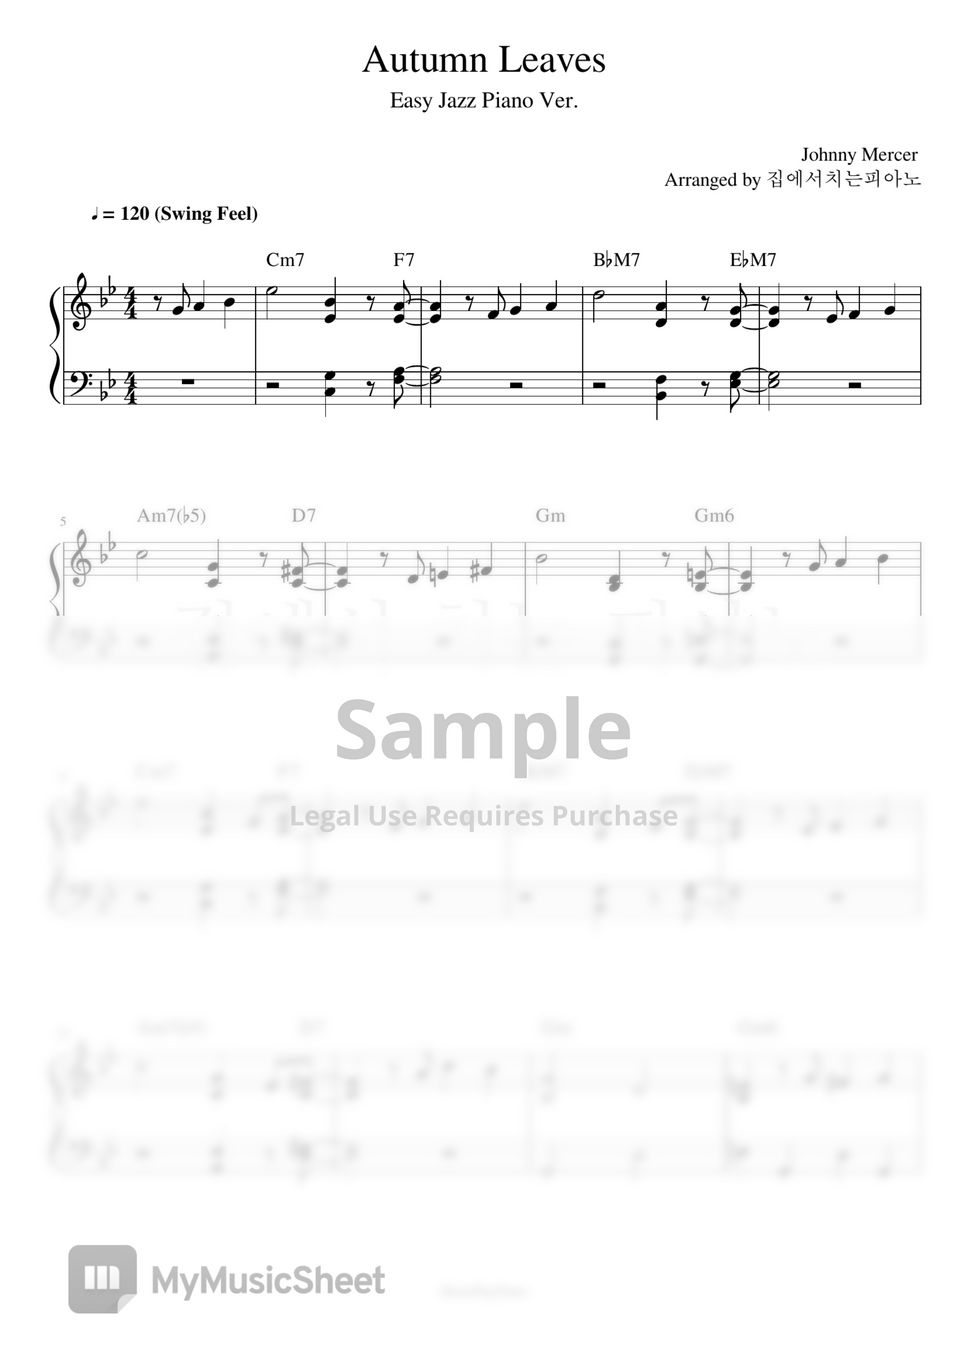 Johnny Mercer - Autumn Leaves (Easy Jazz Piano) by 집에서치는피아노